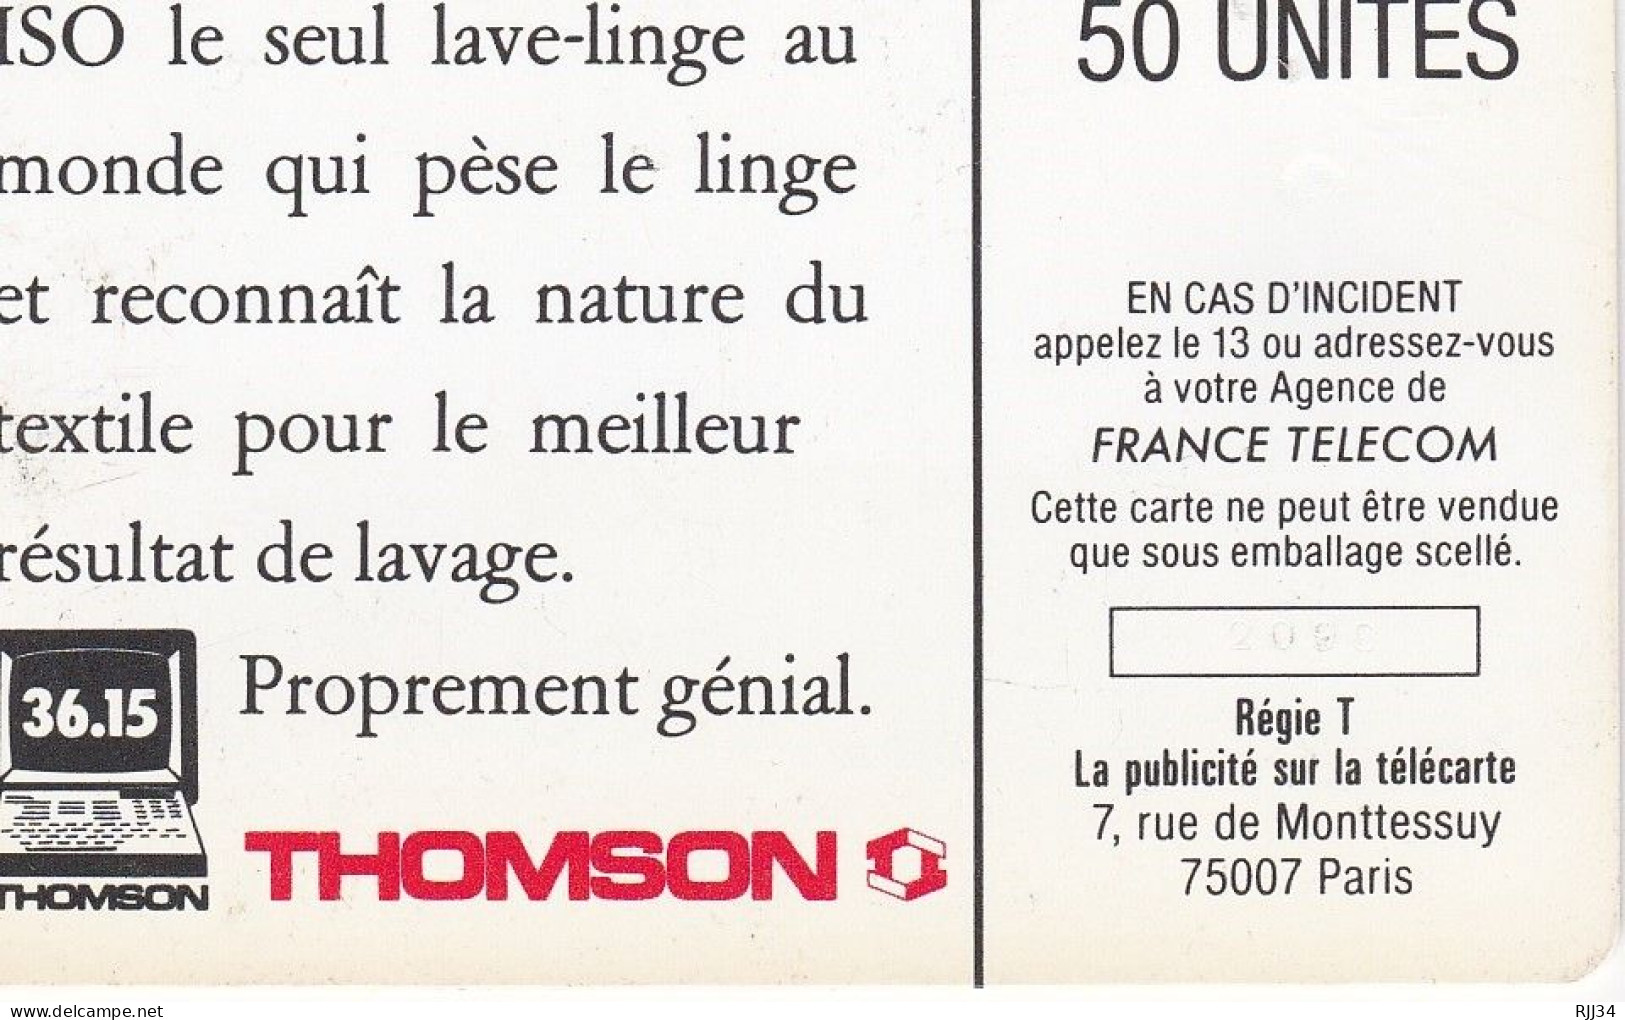 F46D  ISO THOMSON - 1988